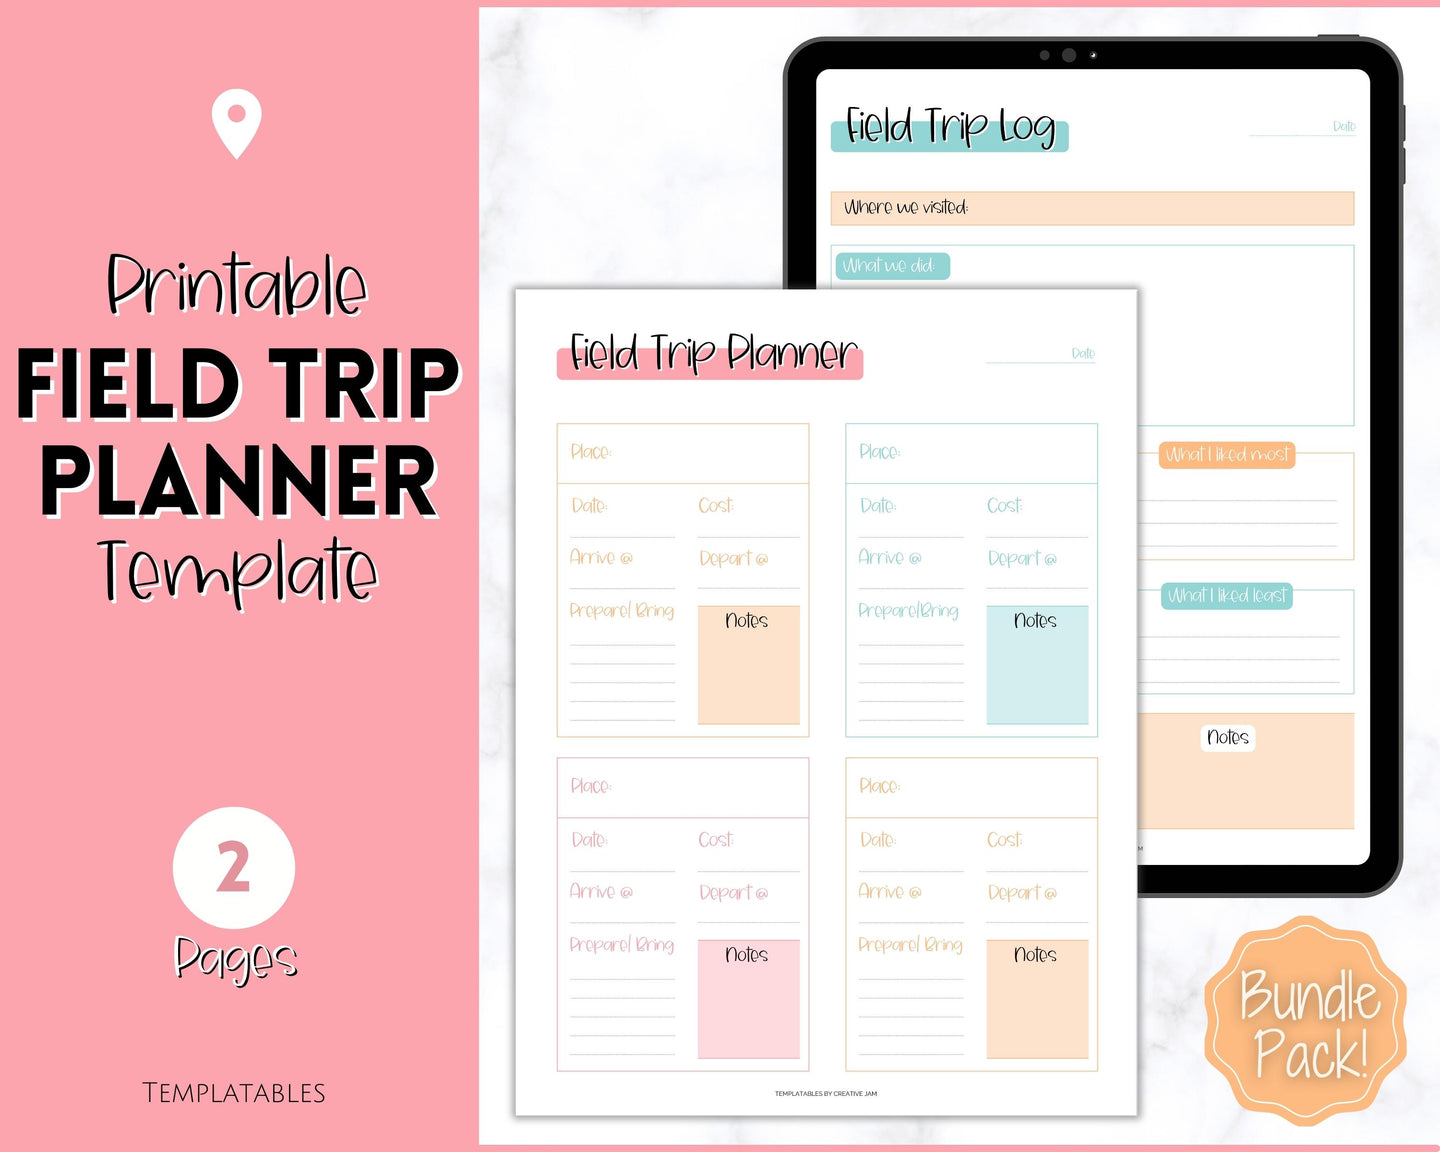 Field Trip Planner BUNDLE - Printable Field Trip Log | Classroom & Field Trip Journal | Colorful Sky